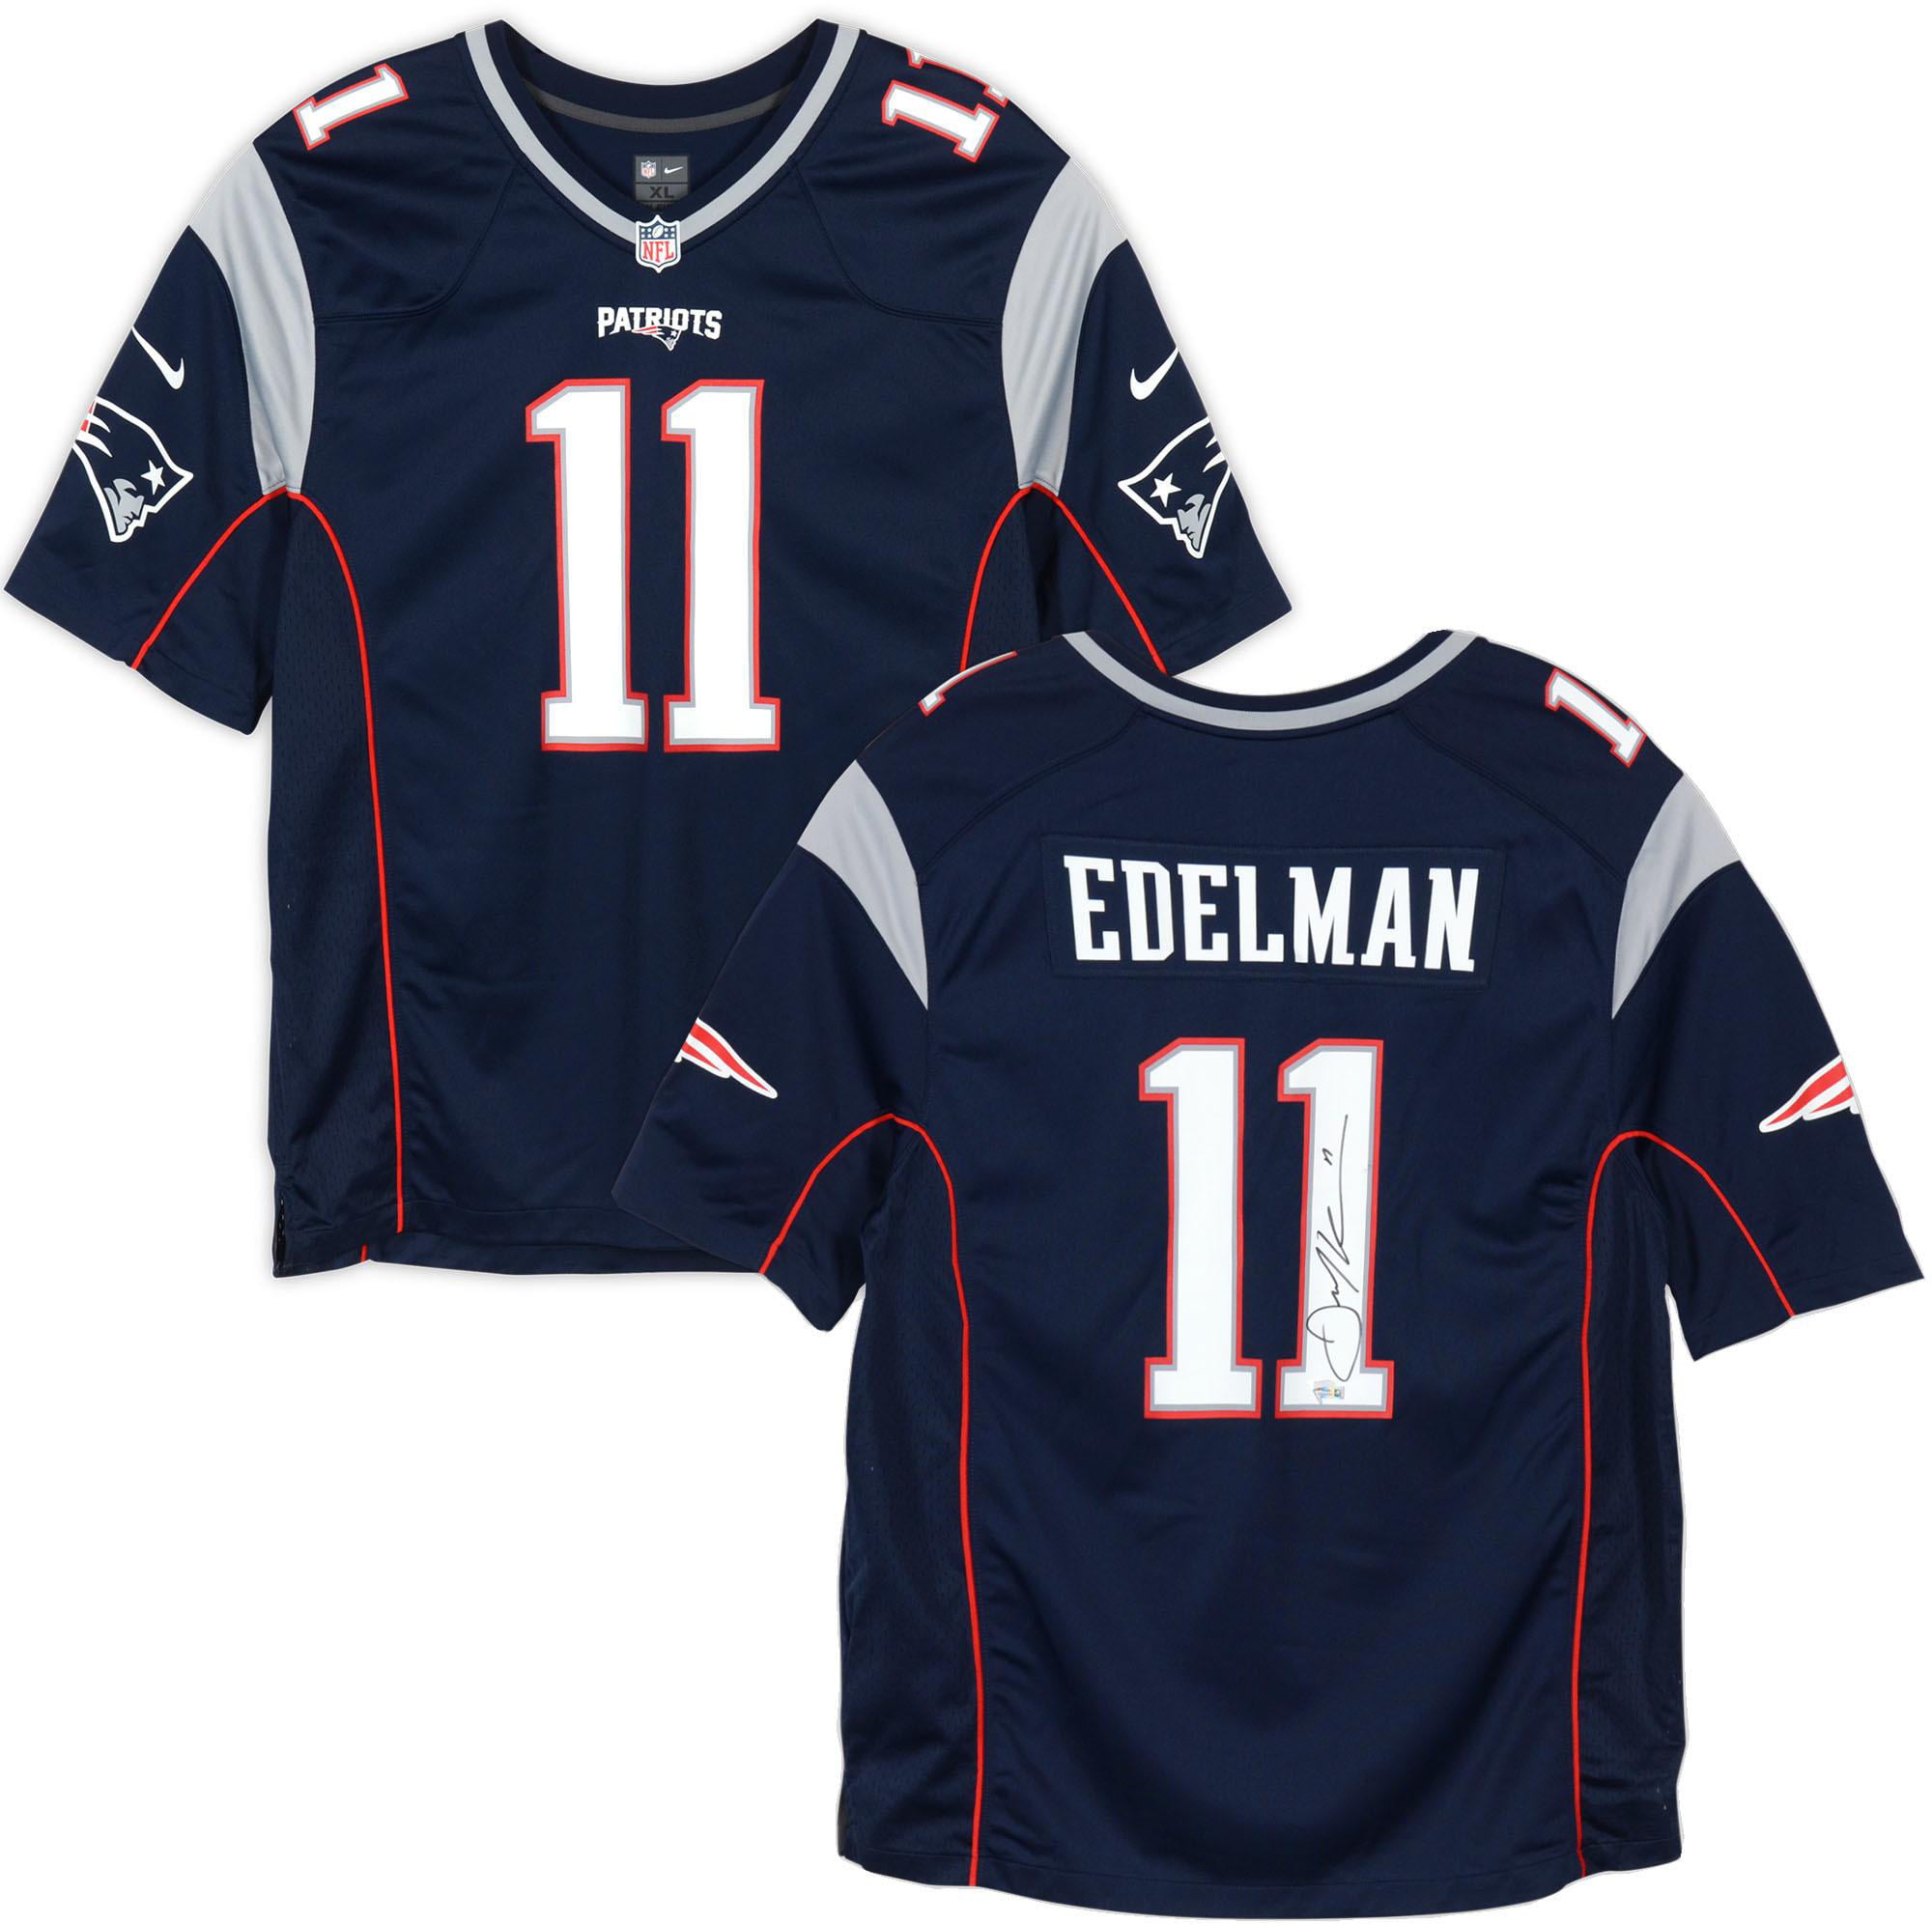 Julian Edelman New England Patriots Autographed Navy Game Jersey - Fanatics Authentic Certified - Walmart.com